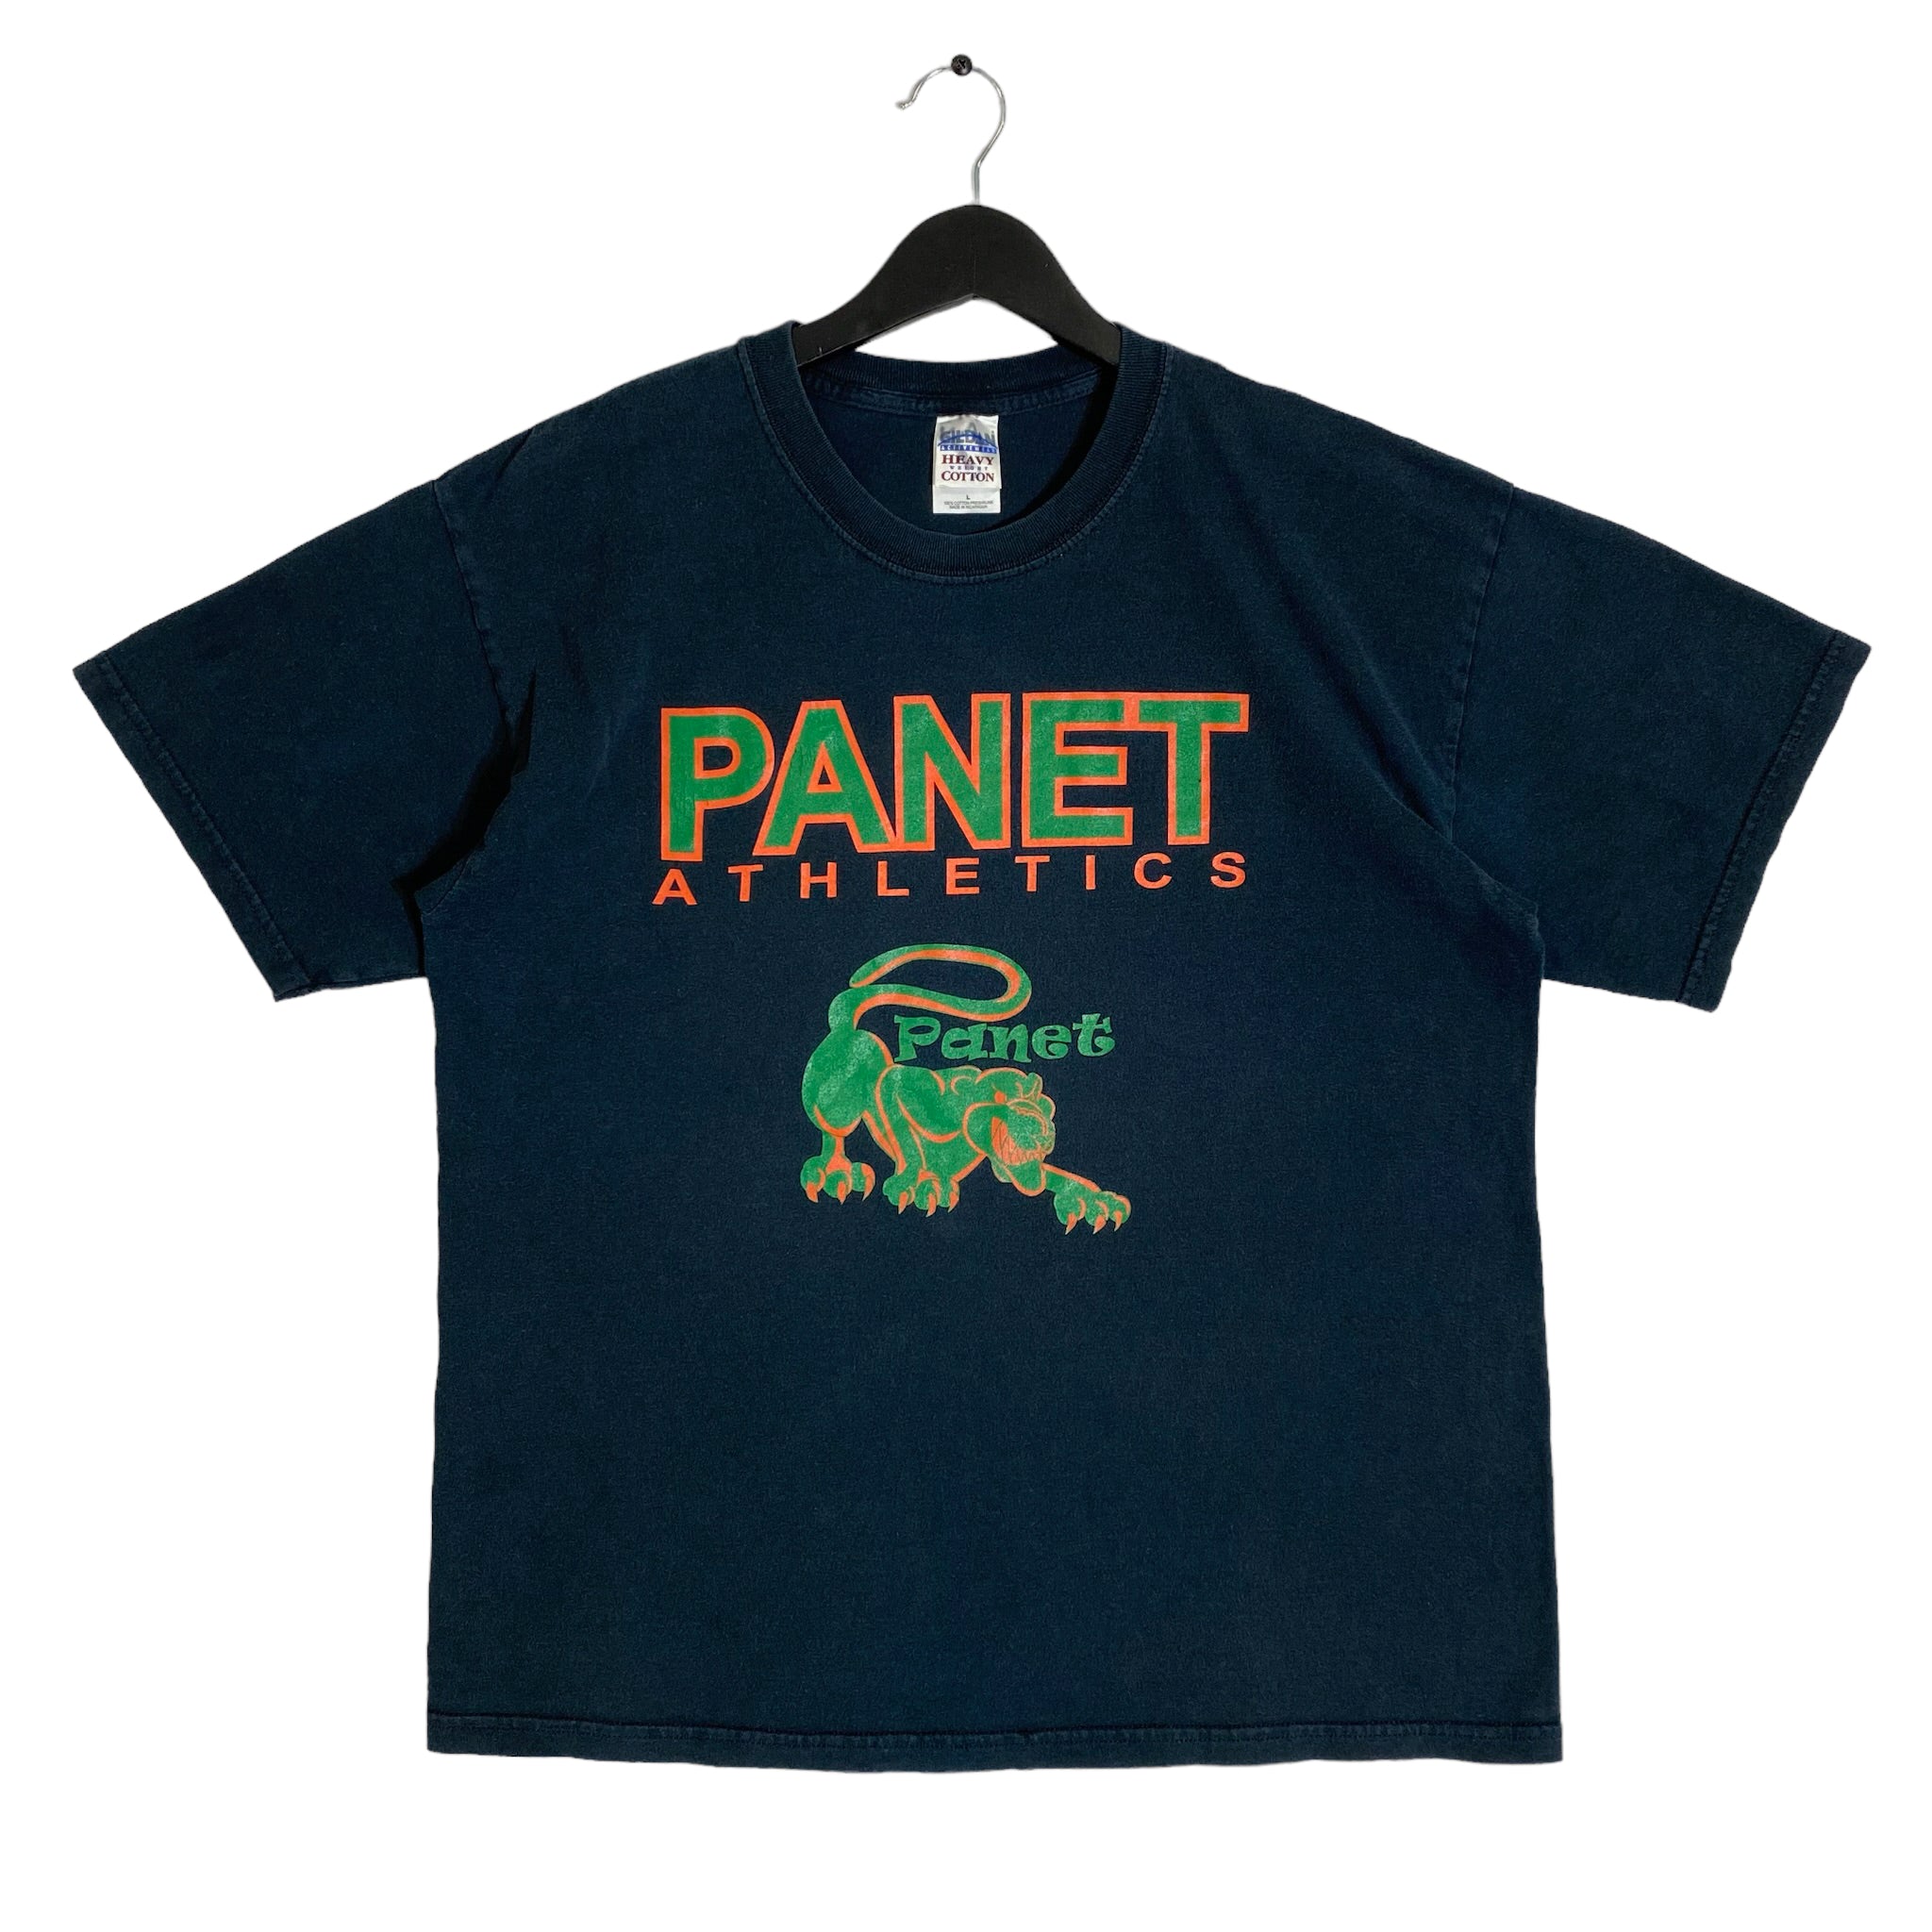 Vintage Panet Athletics Shirt 2000s